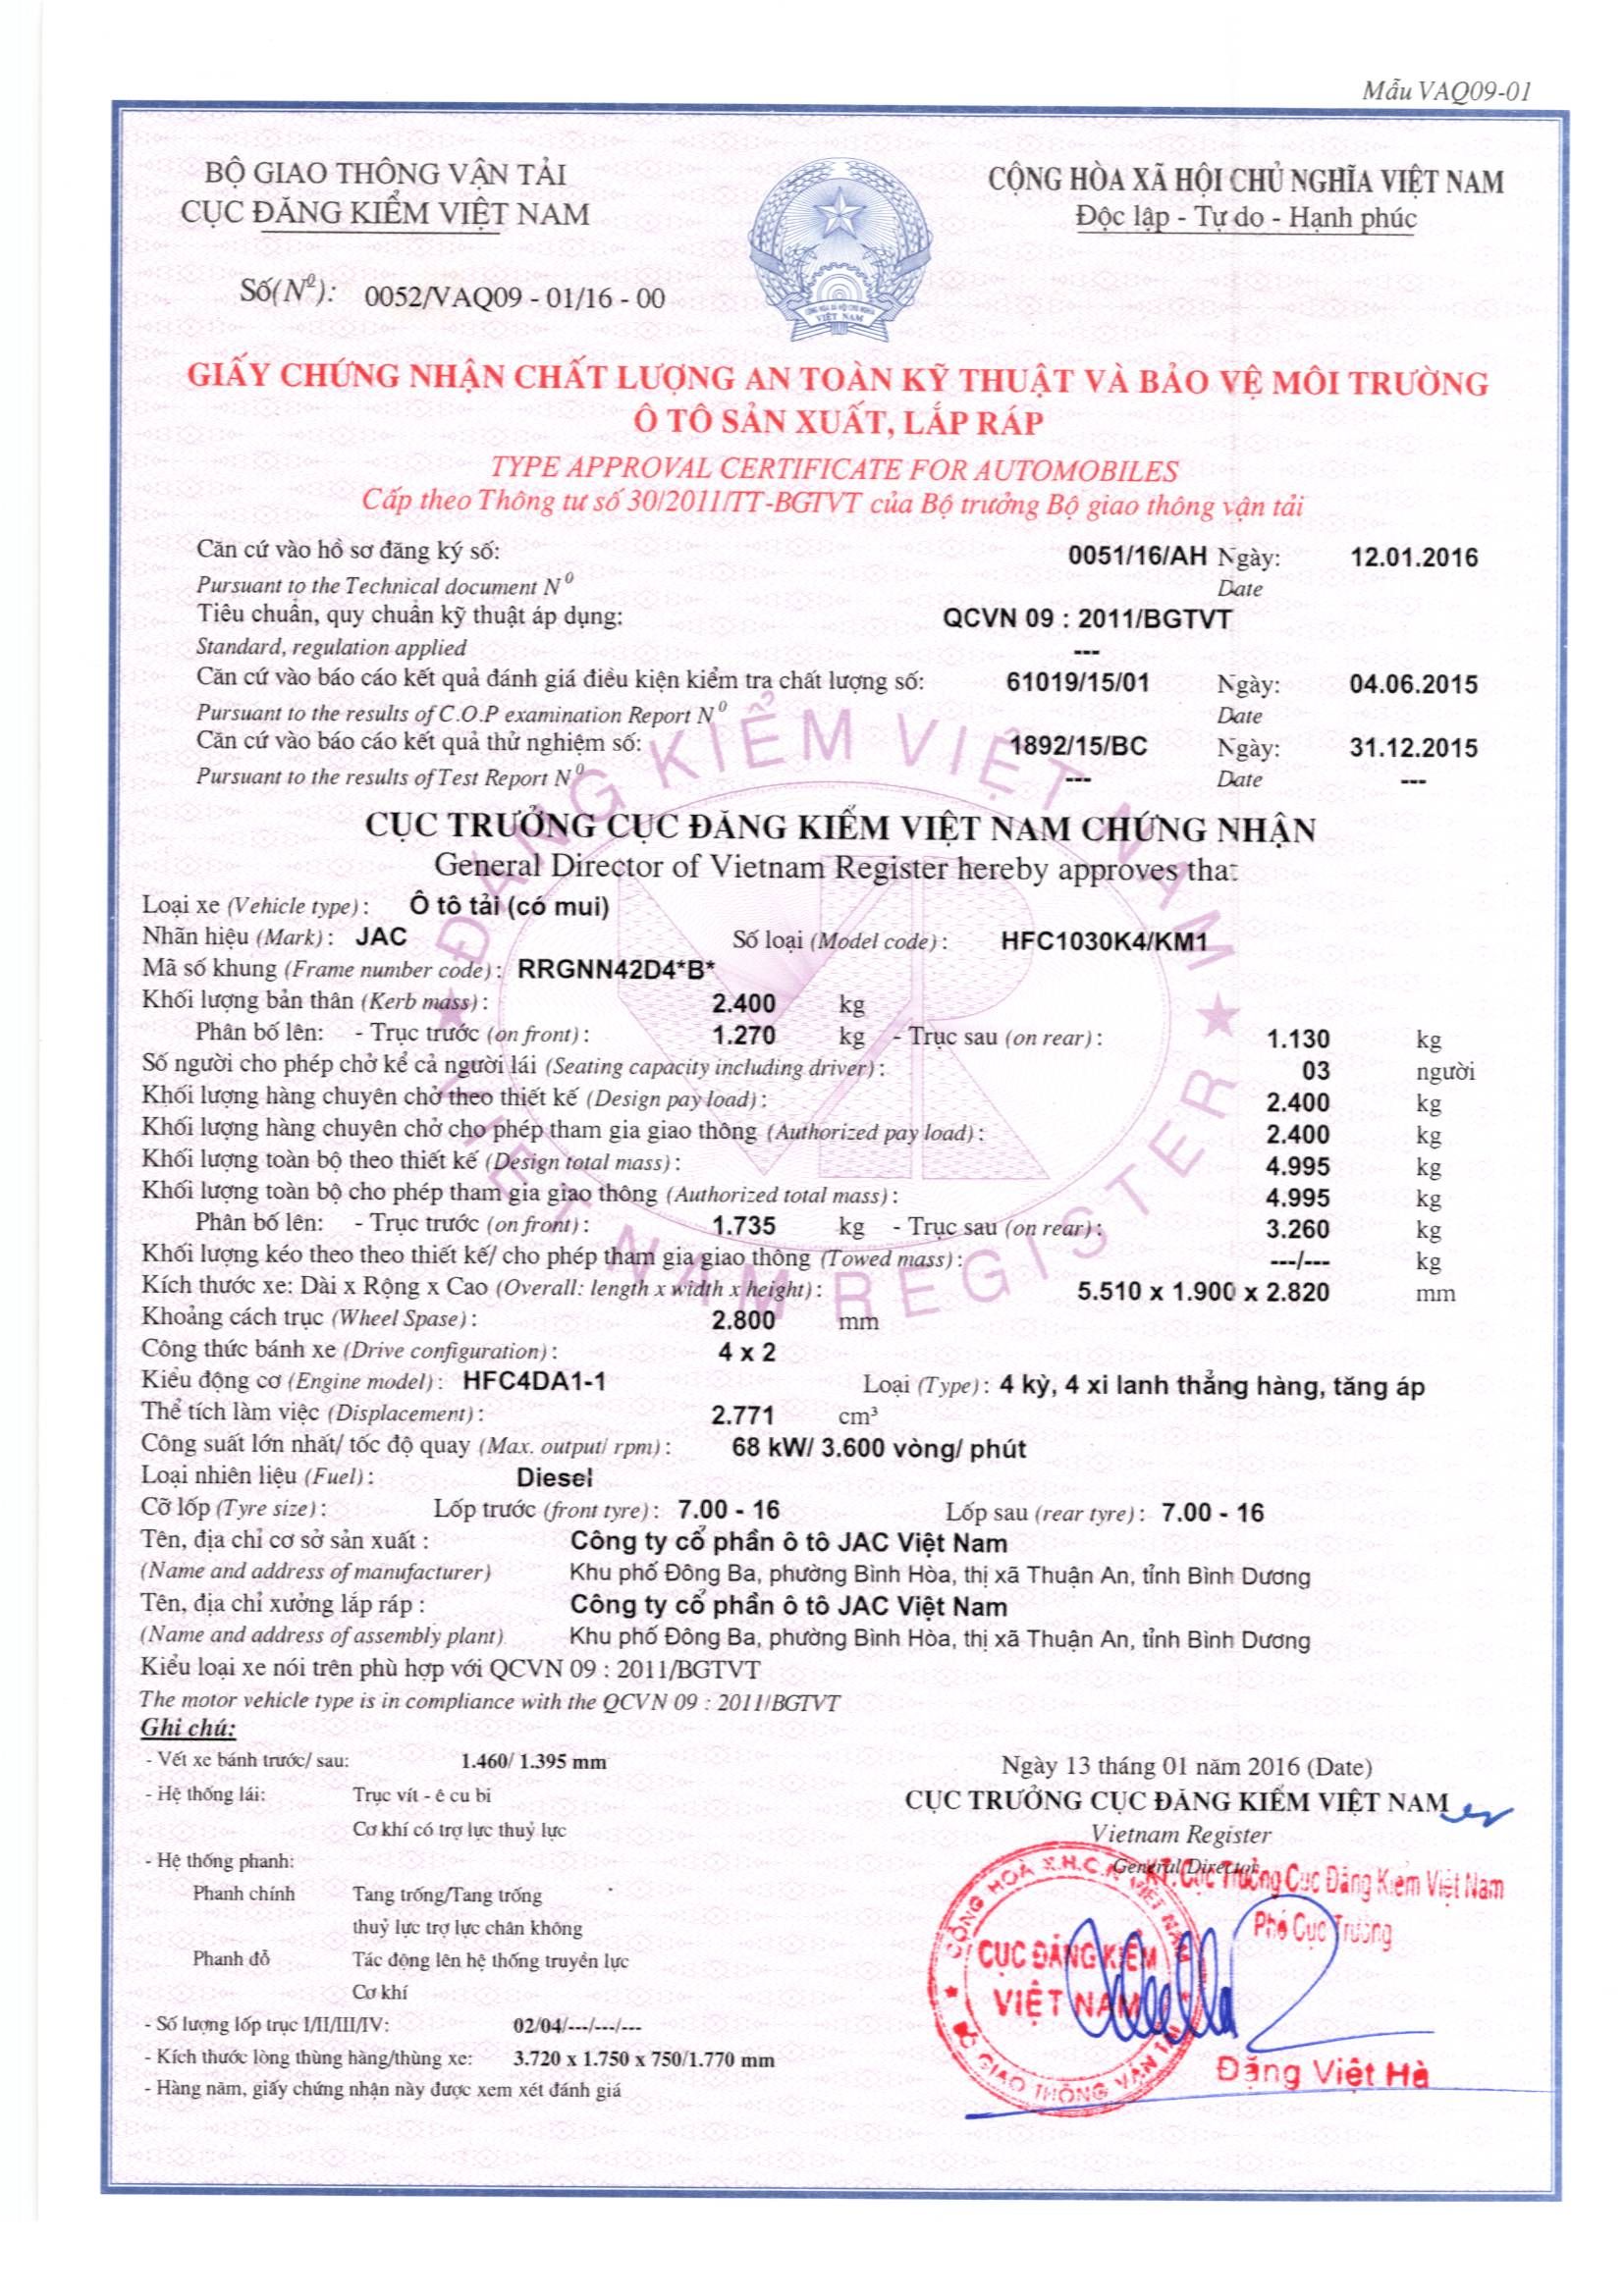 TSKT Jac cc 2.4T (HFC1030K4), Thùng Bạt 13-1-2016